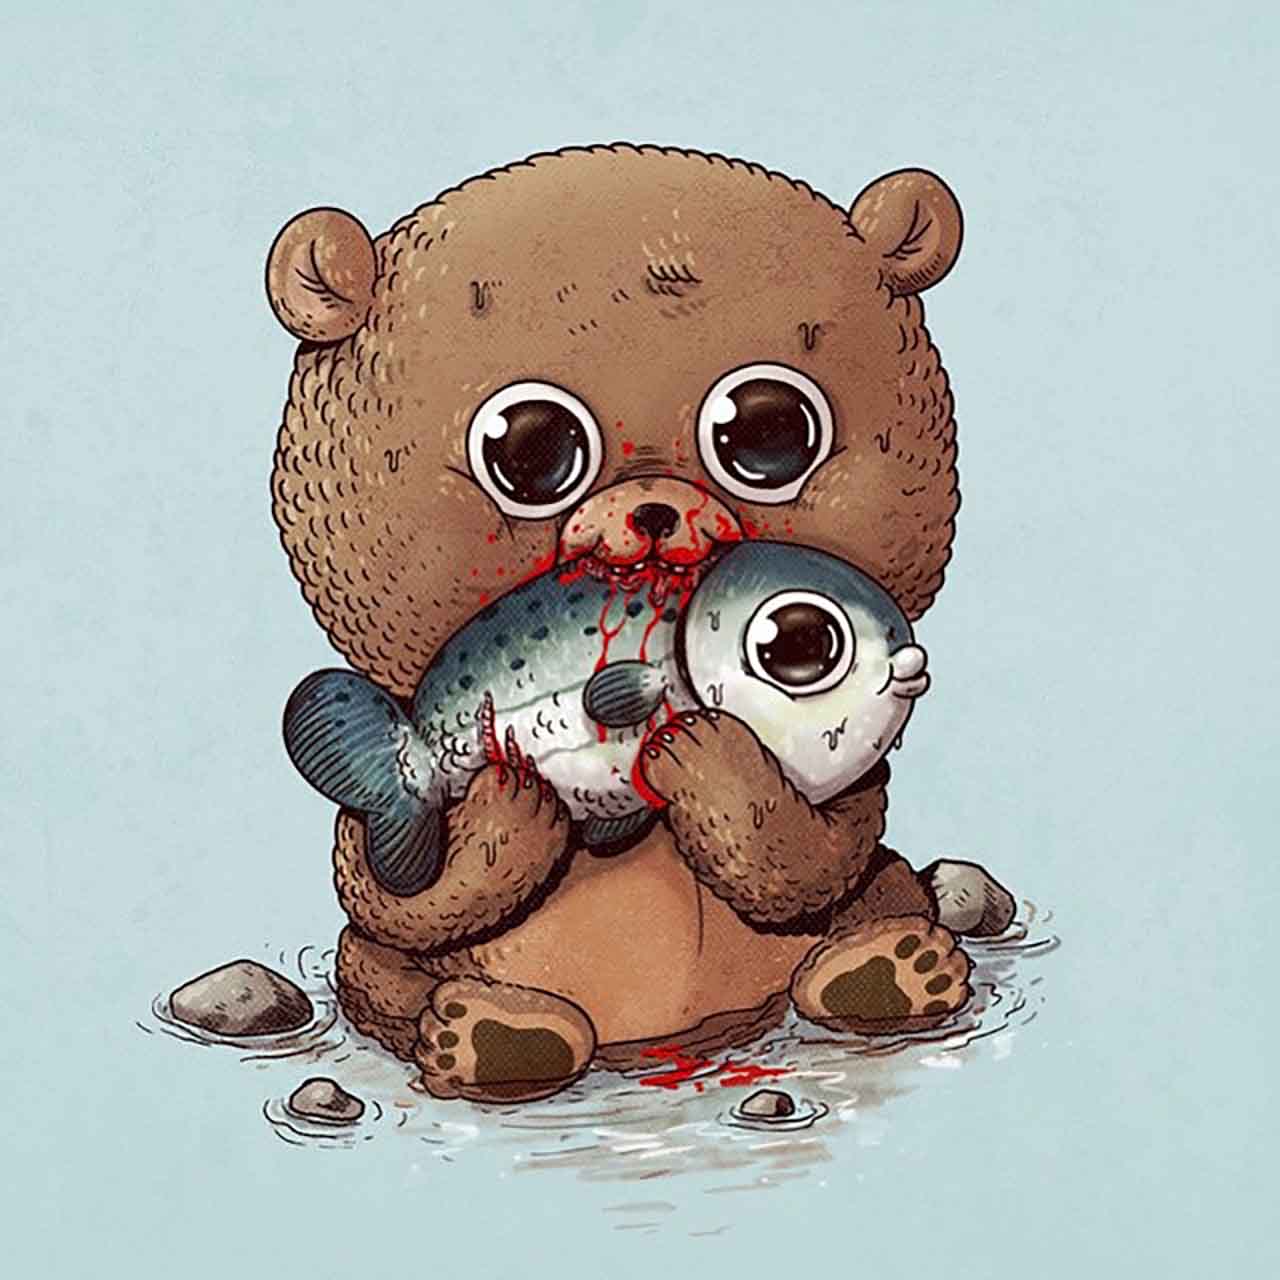  Artist Creates Extremely Adorable “Predator & Prey” Illustrations #5: Bear & Salmon 